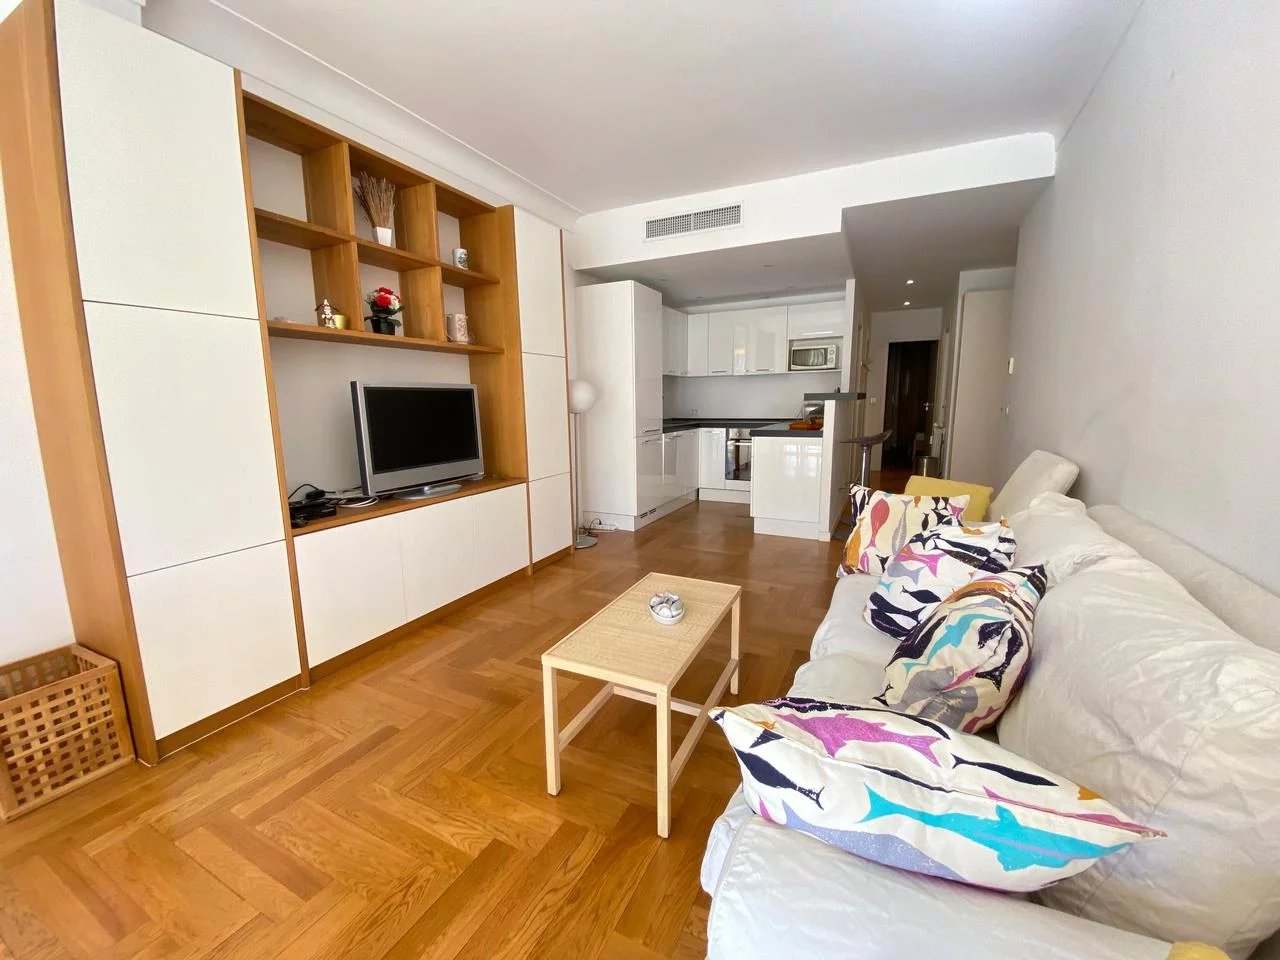 Appartement  3 Locali 61.65m2  In vendita   720 000 €